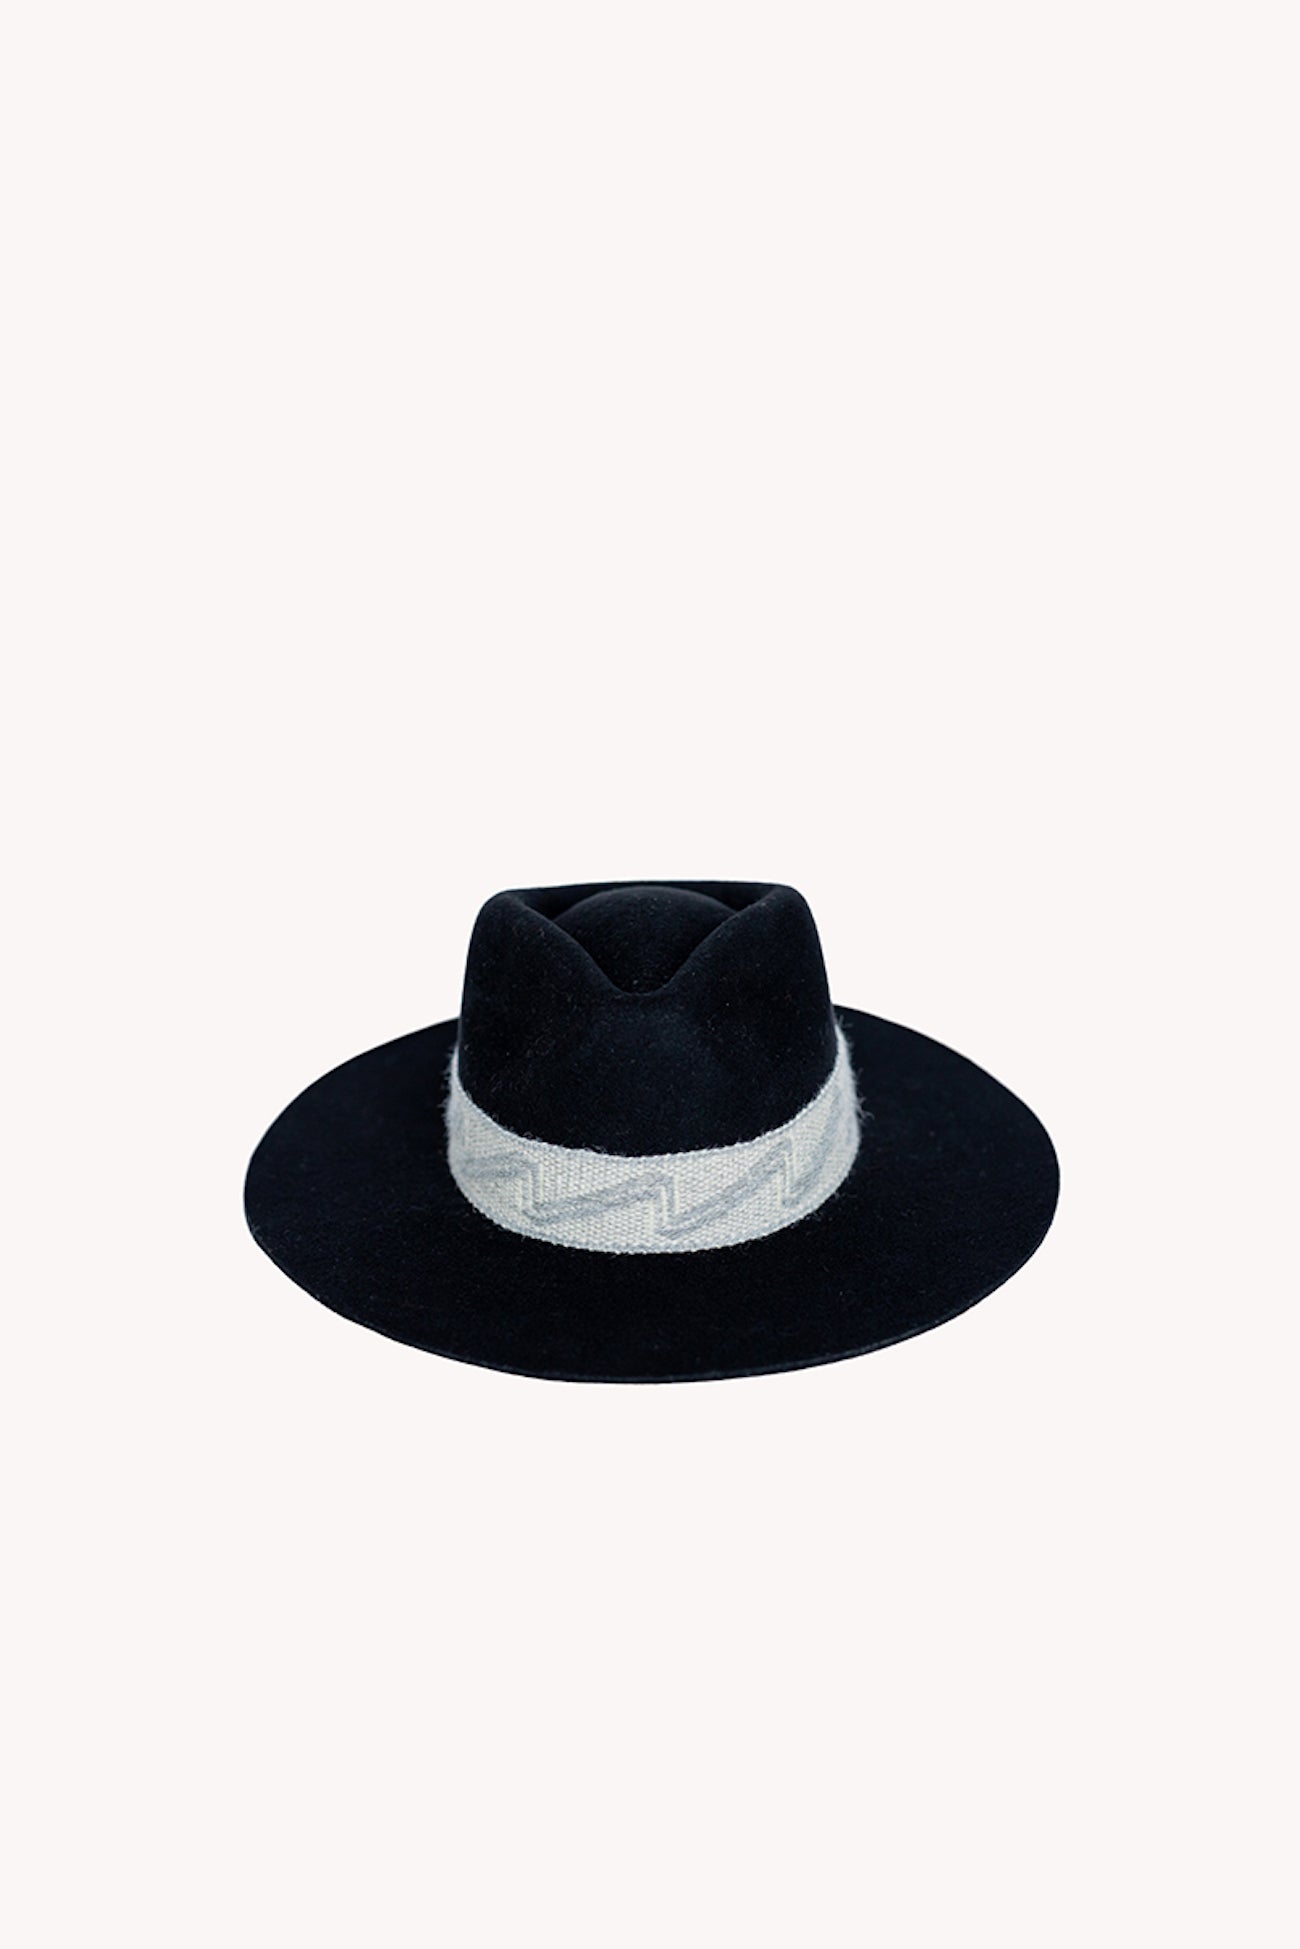 black western style hat